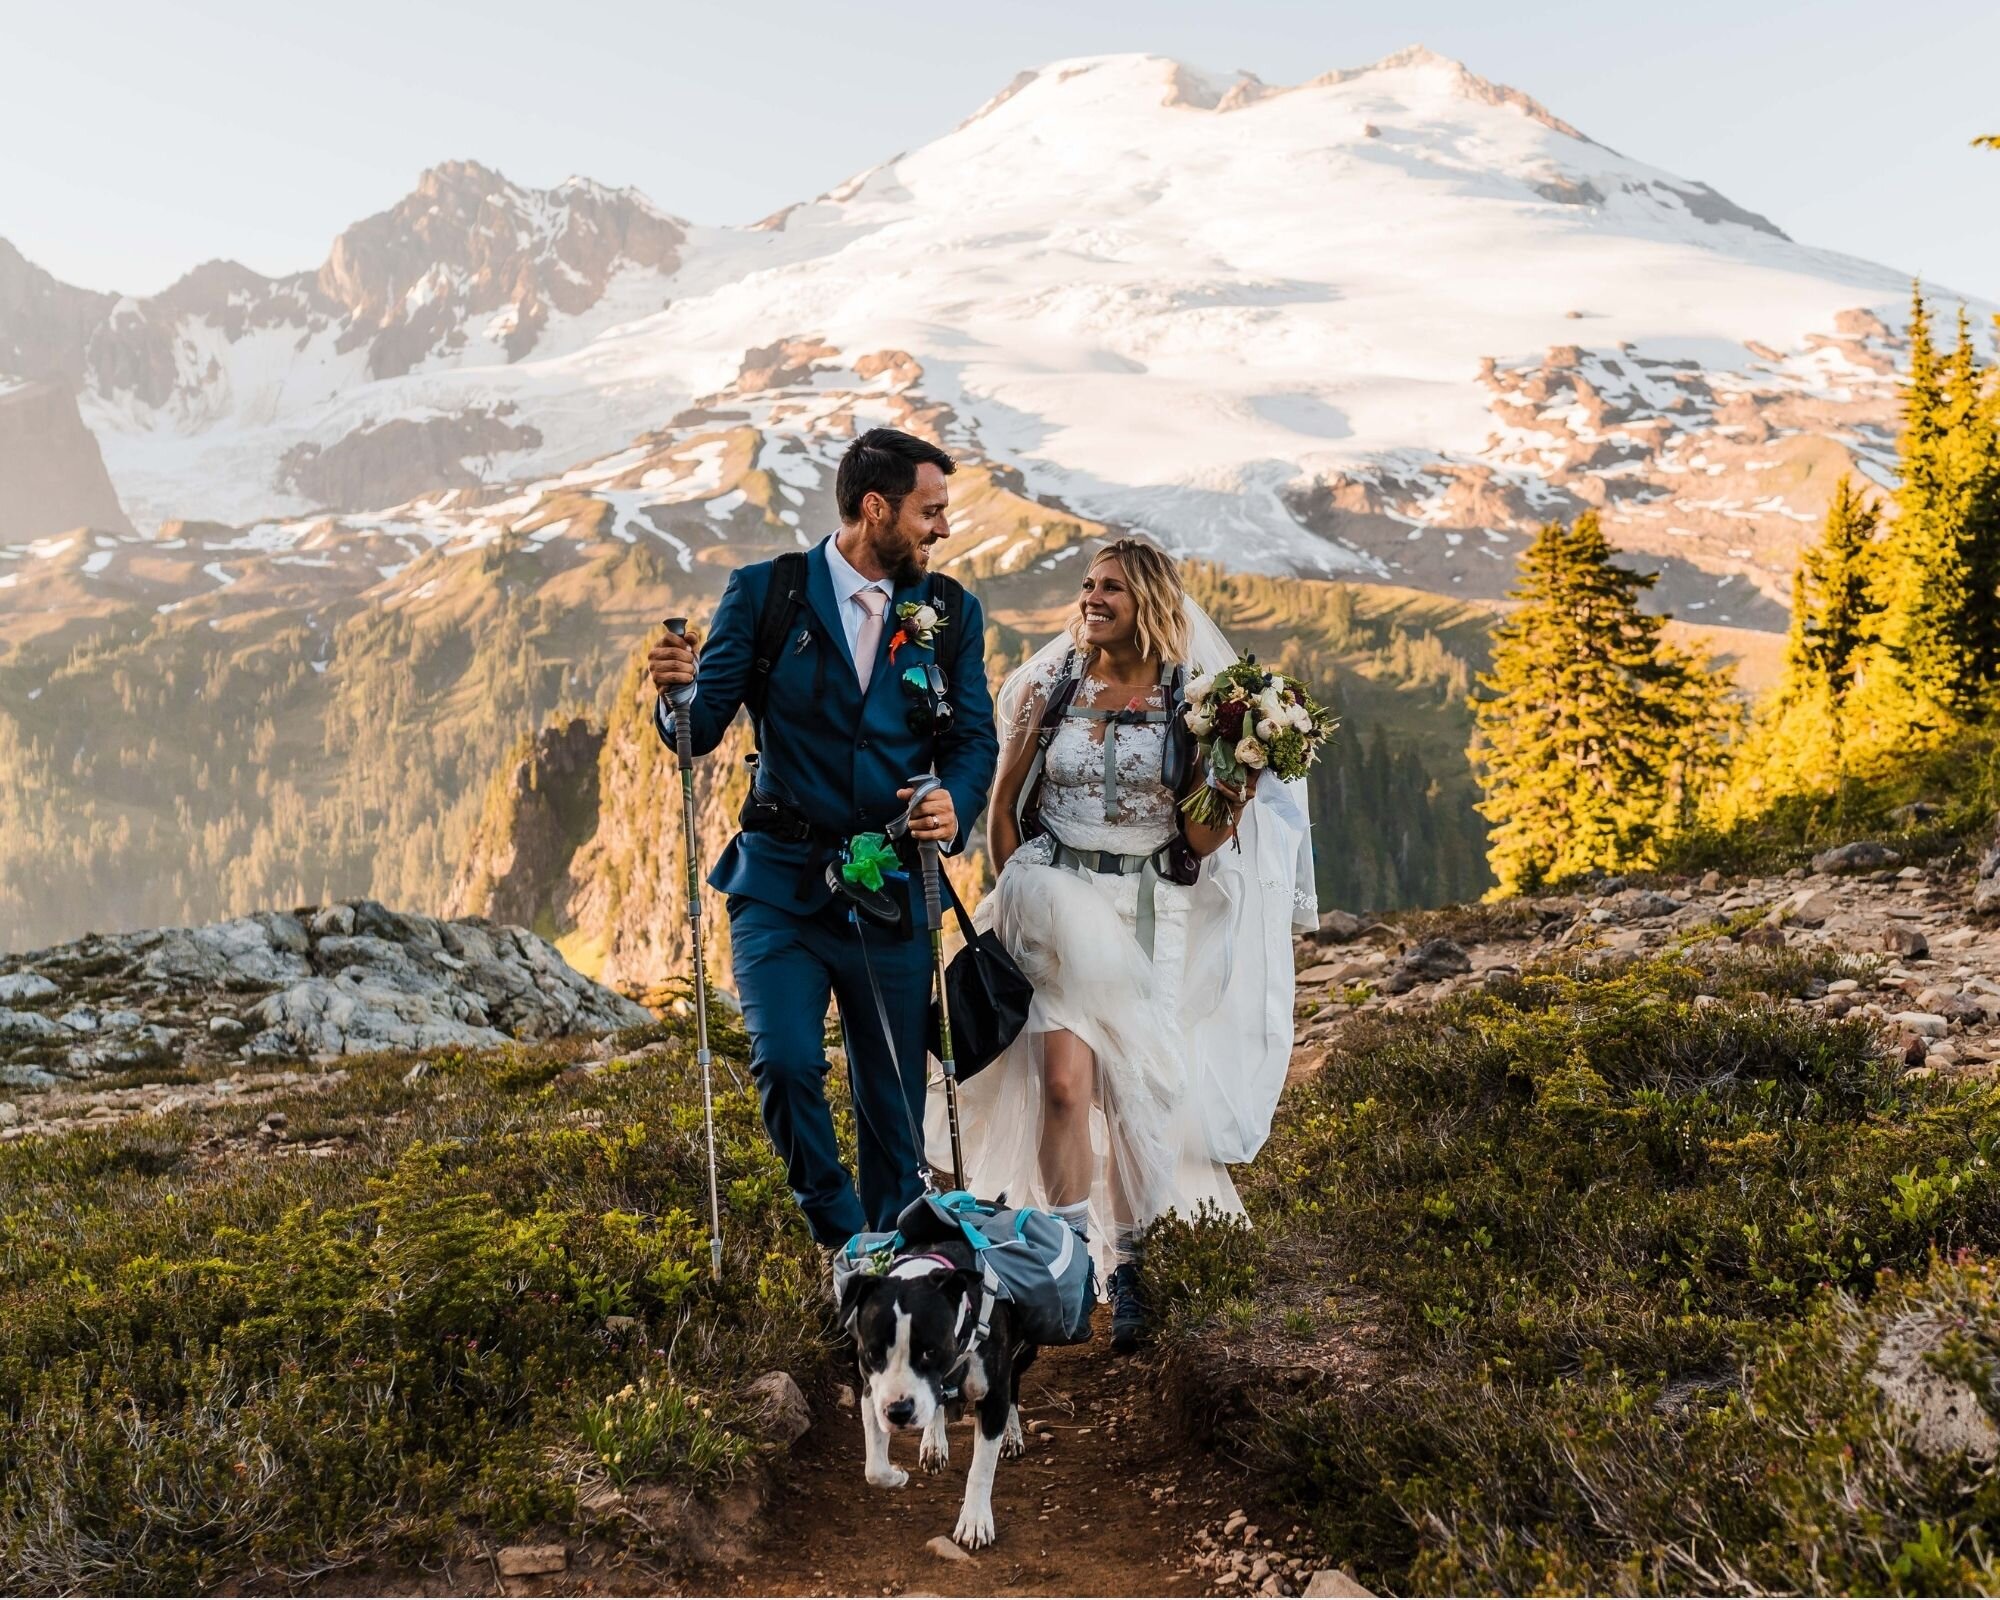 National Park Wedding Venue | Between the Pine Adventure Elopement Photography